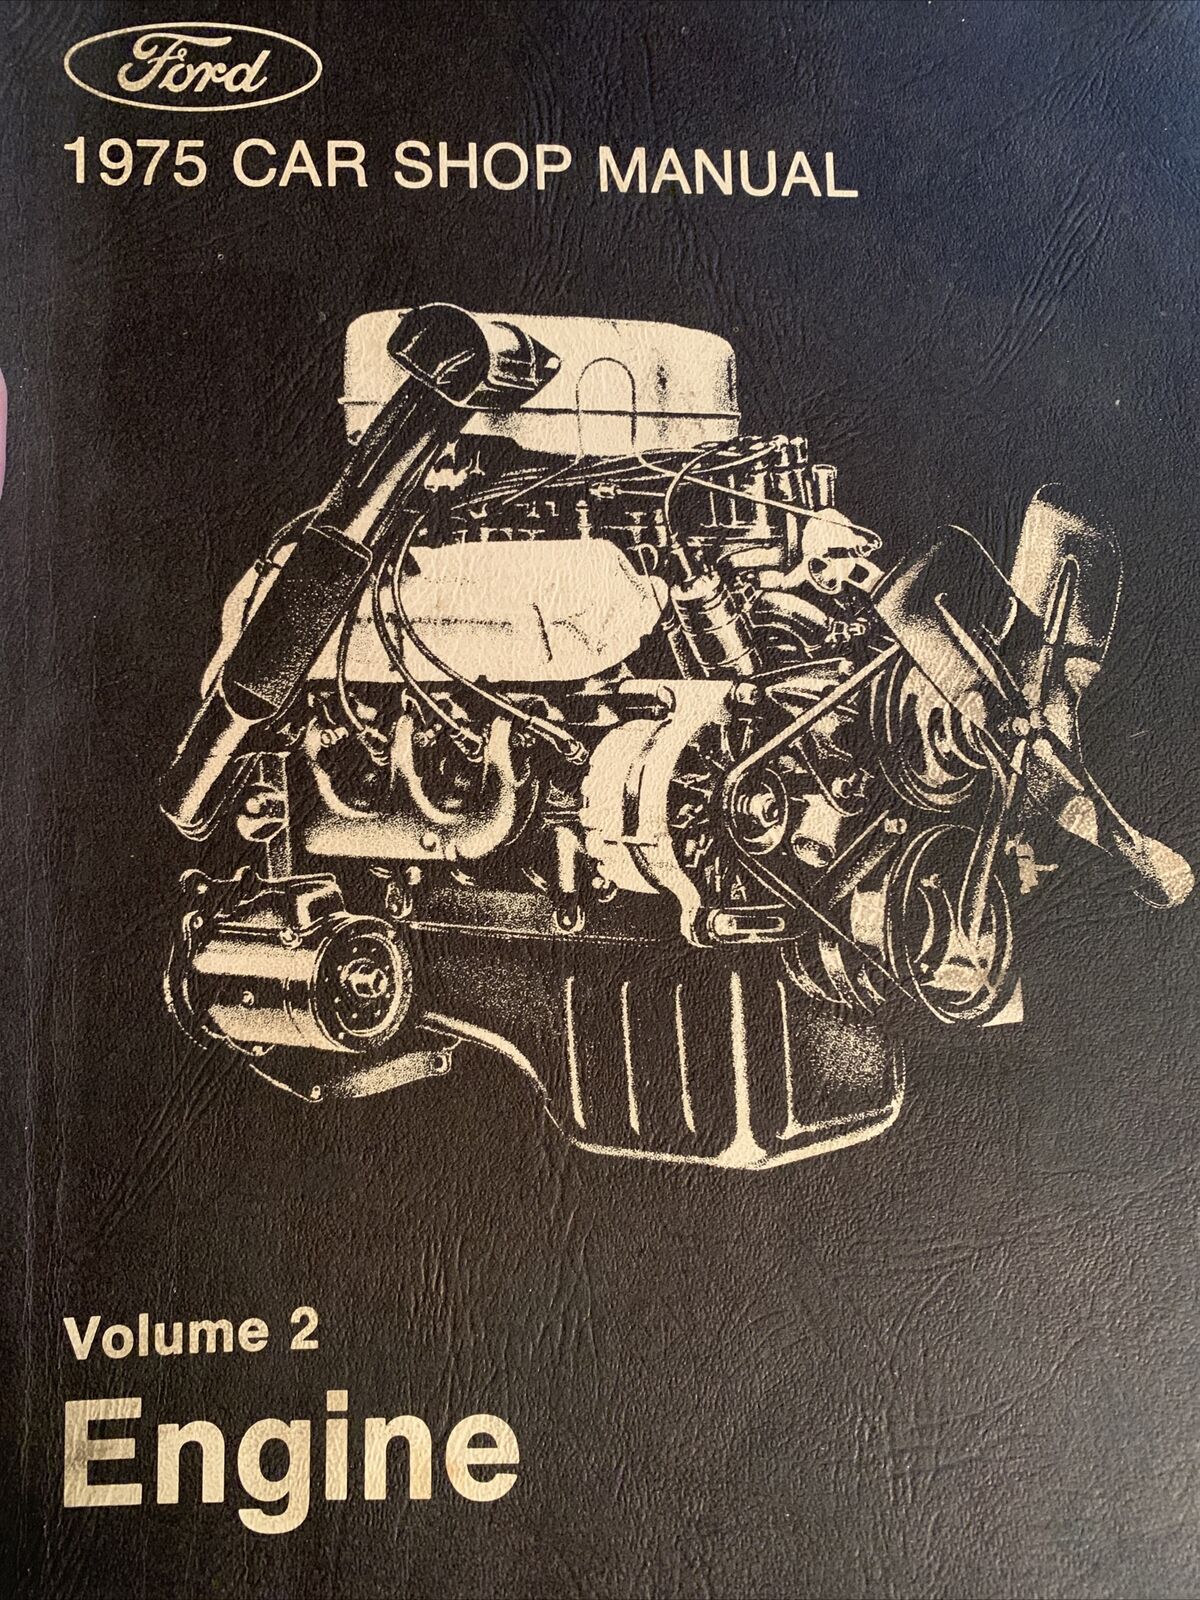 Ford 1975 Engine manual volume 2 